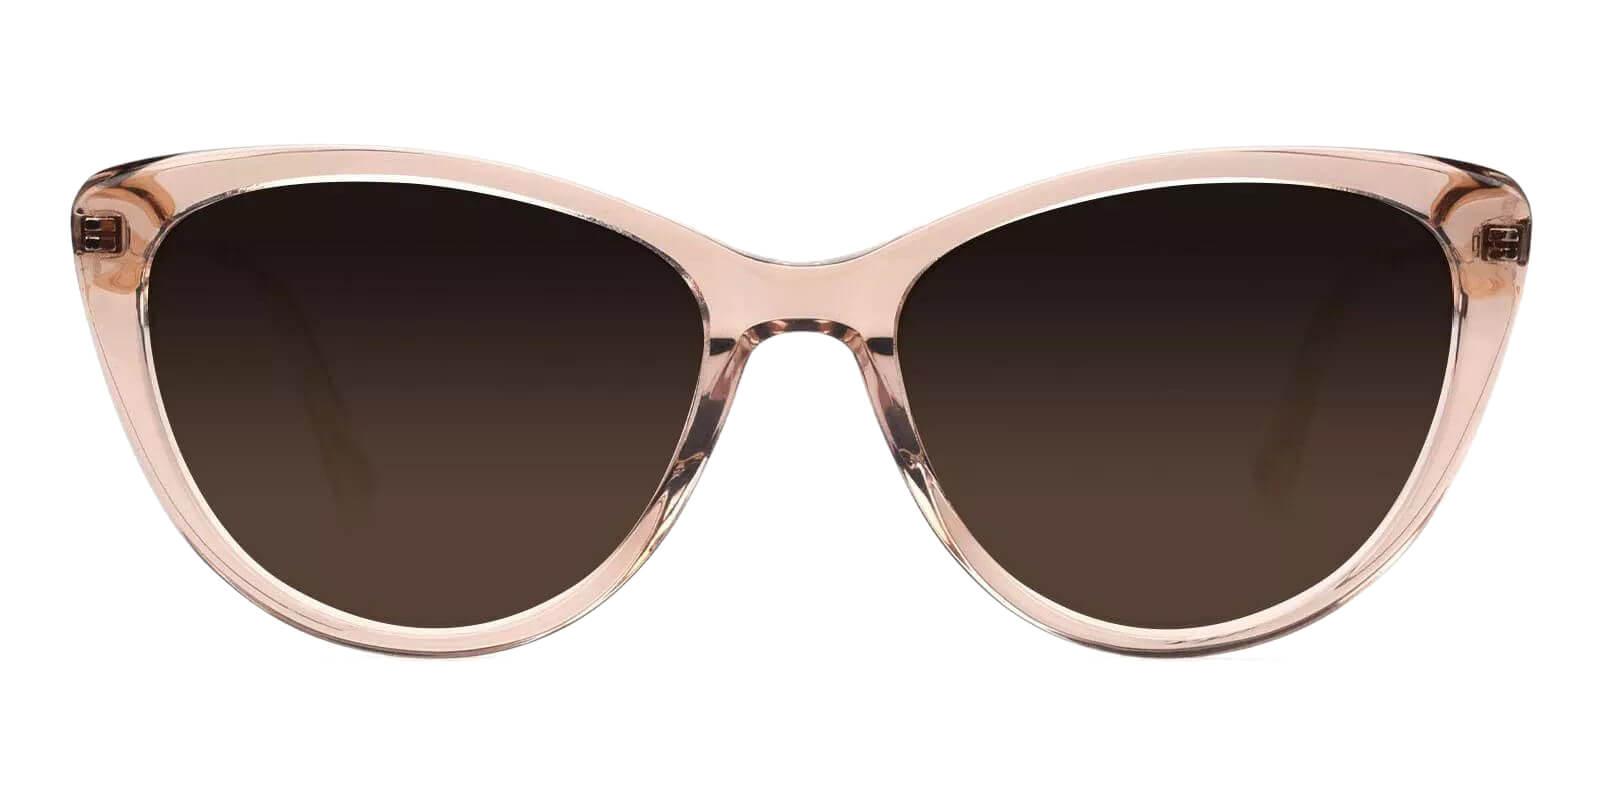 Benson Pink Combination Fashion , SpringHinges , Sunglasses , UniversalBridgeFit Frames from ABBE Glasses